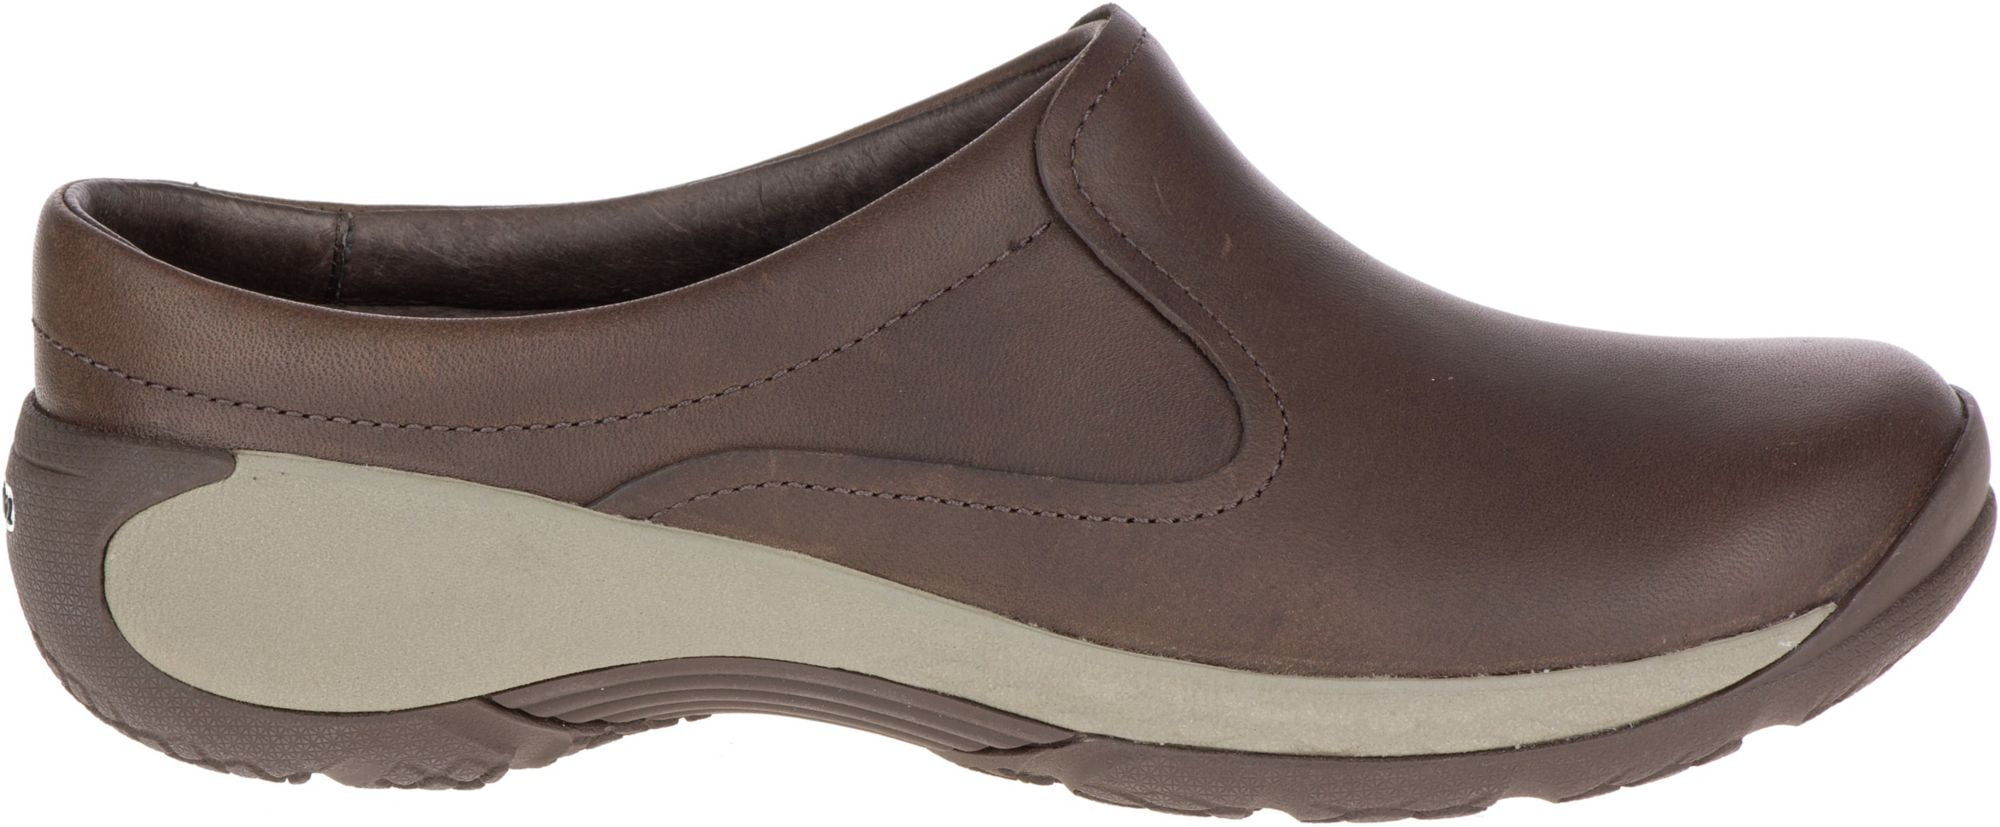 merrell women's encore q2 slide leather casual shoes - Walmart.com